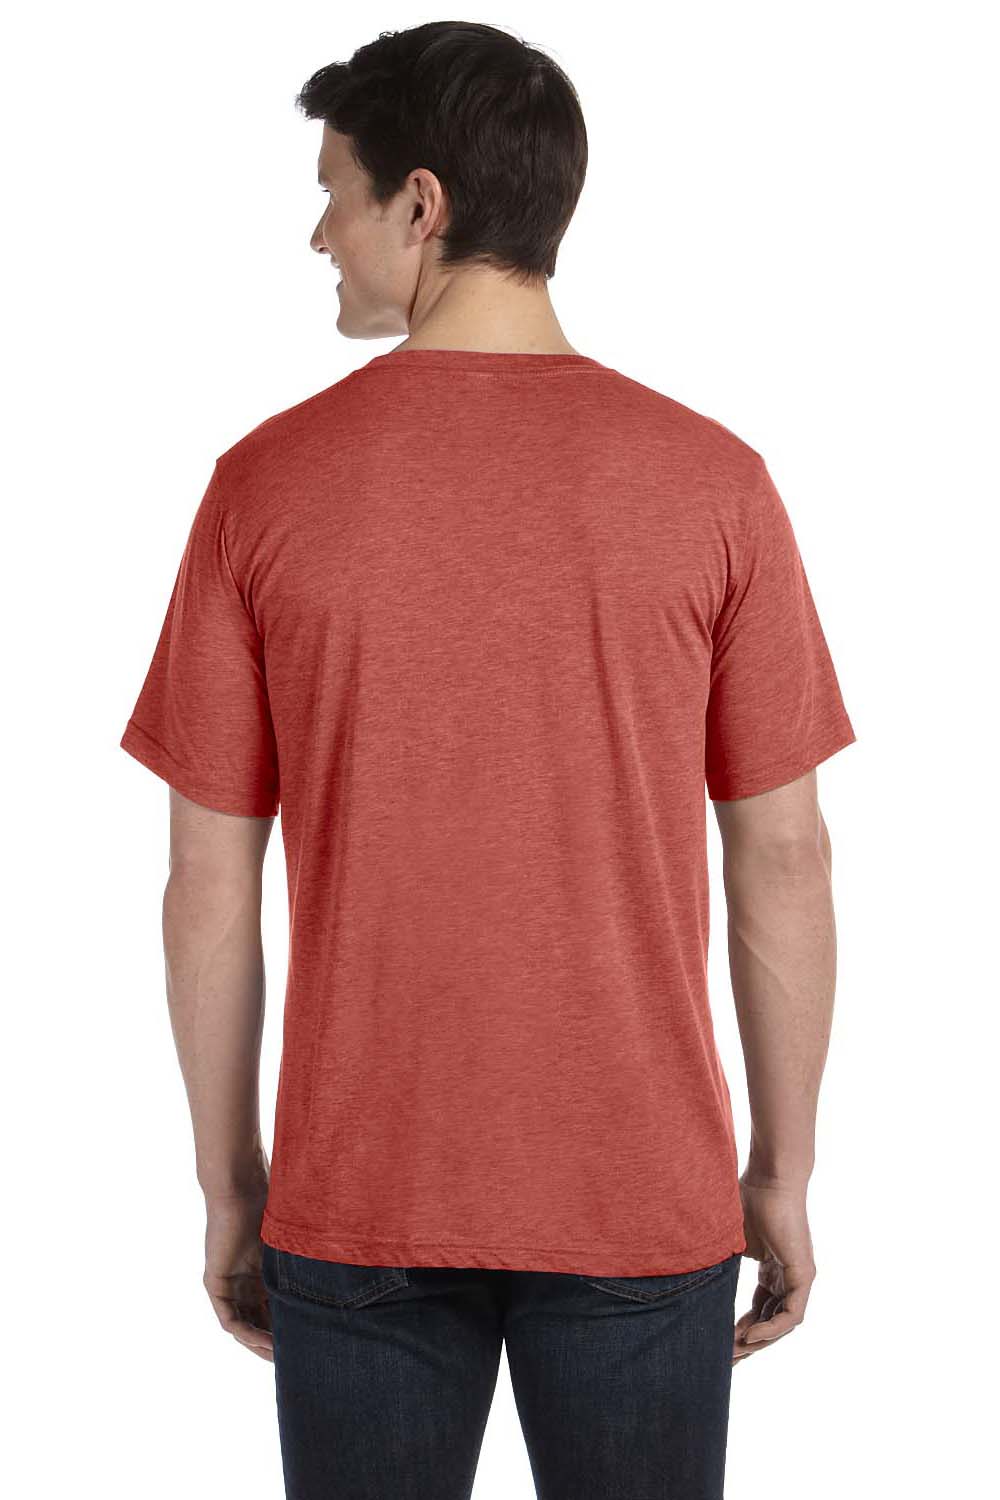 Bella + Canvas BC3415/3415C/3415 Mens Short Sleeve V-Neck T-Shirt Clay Red Model Back